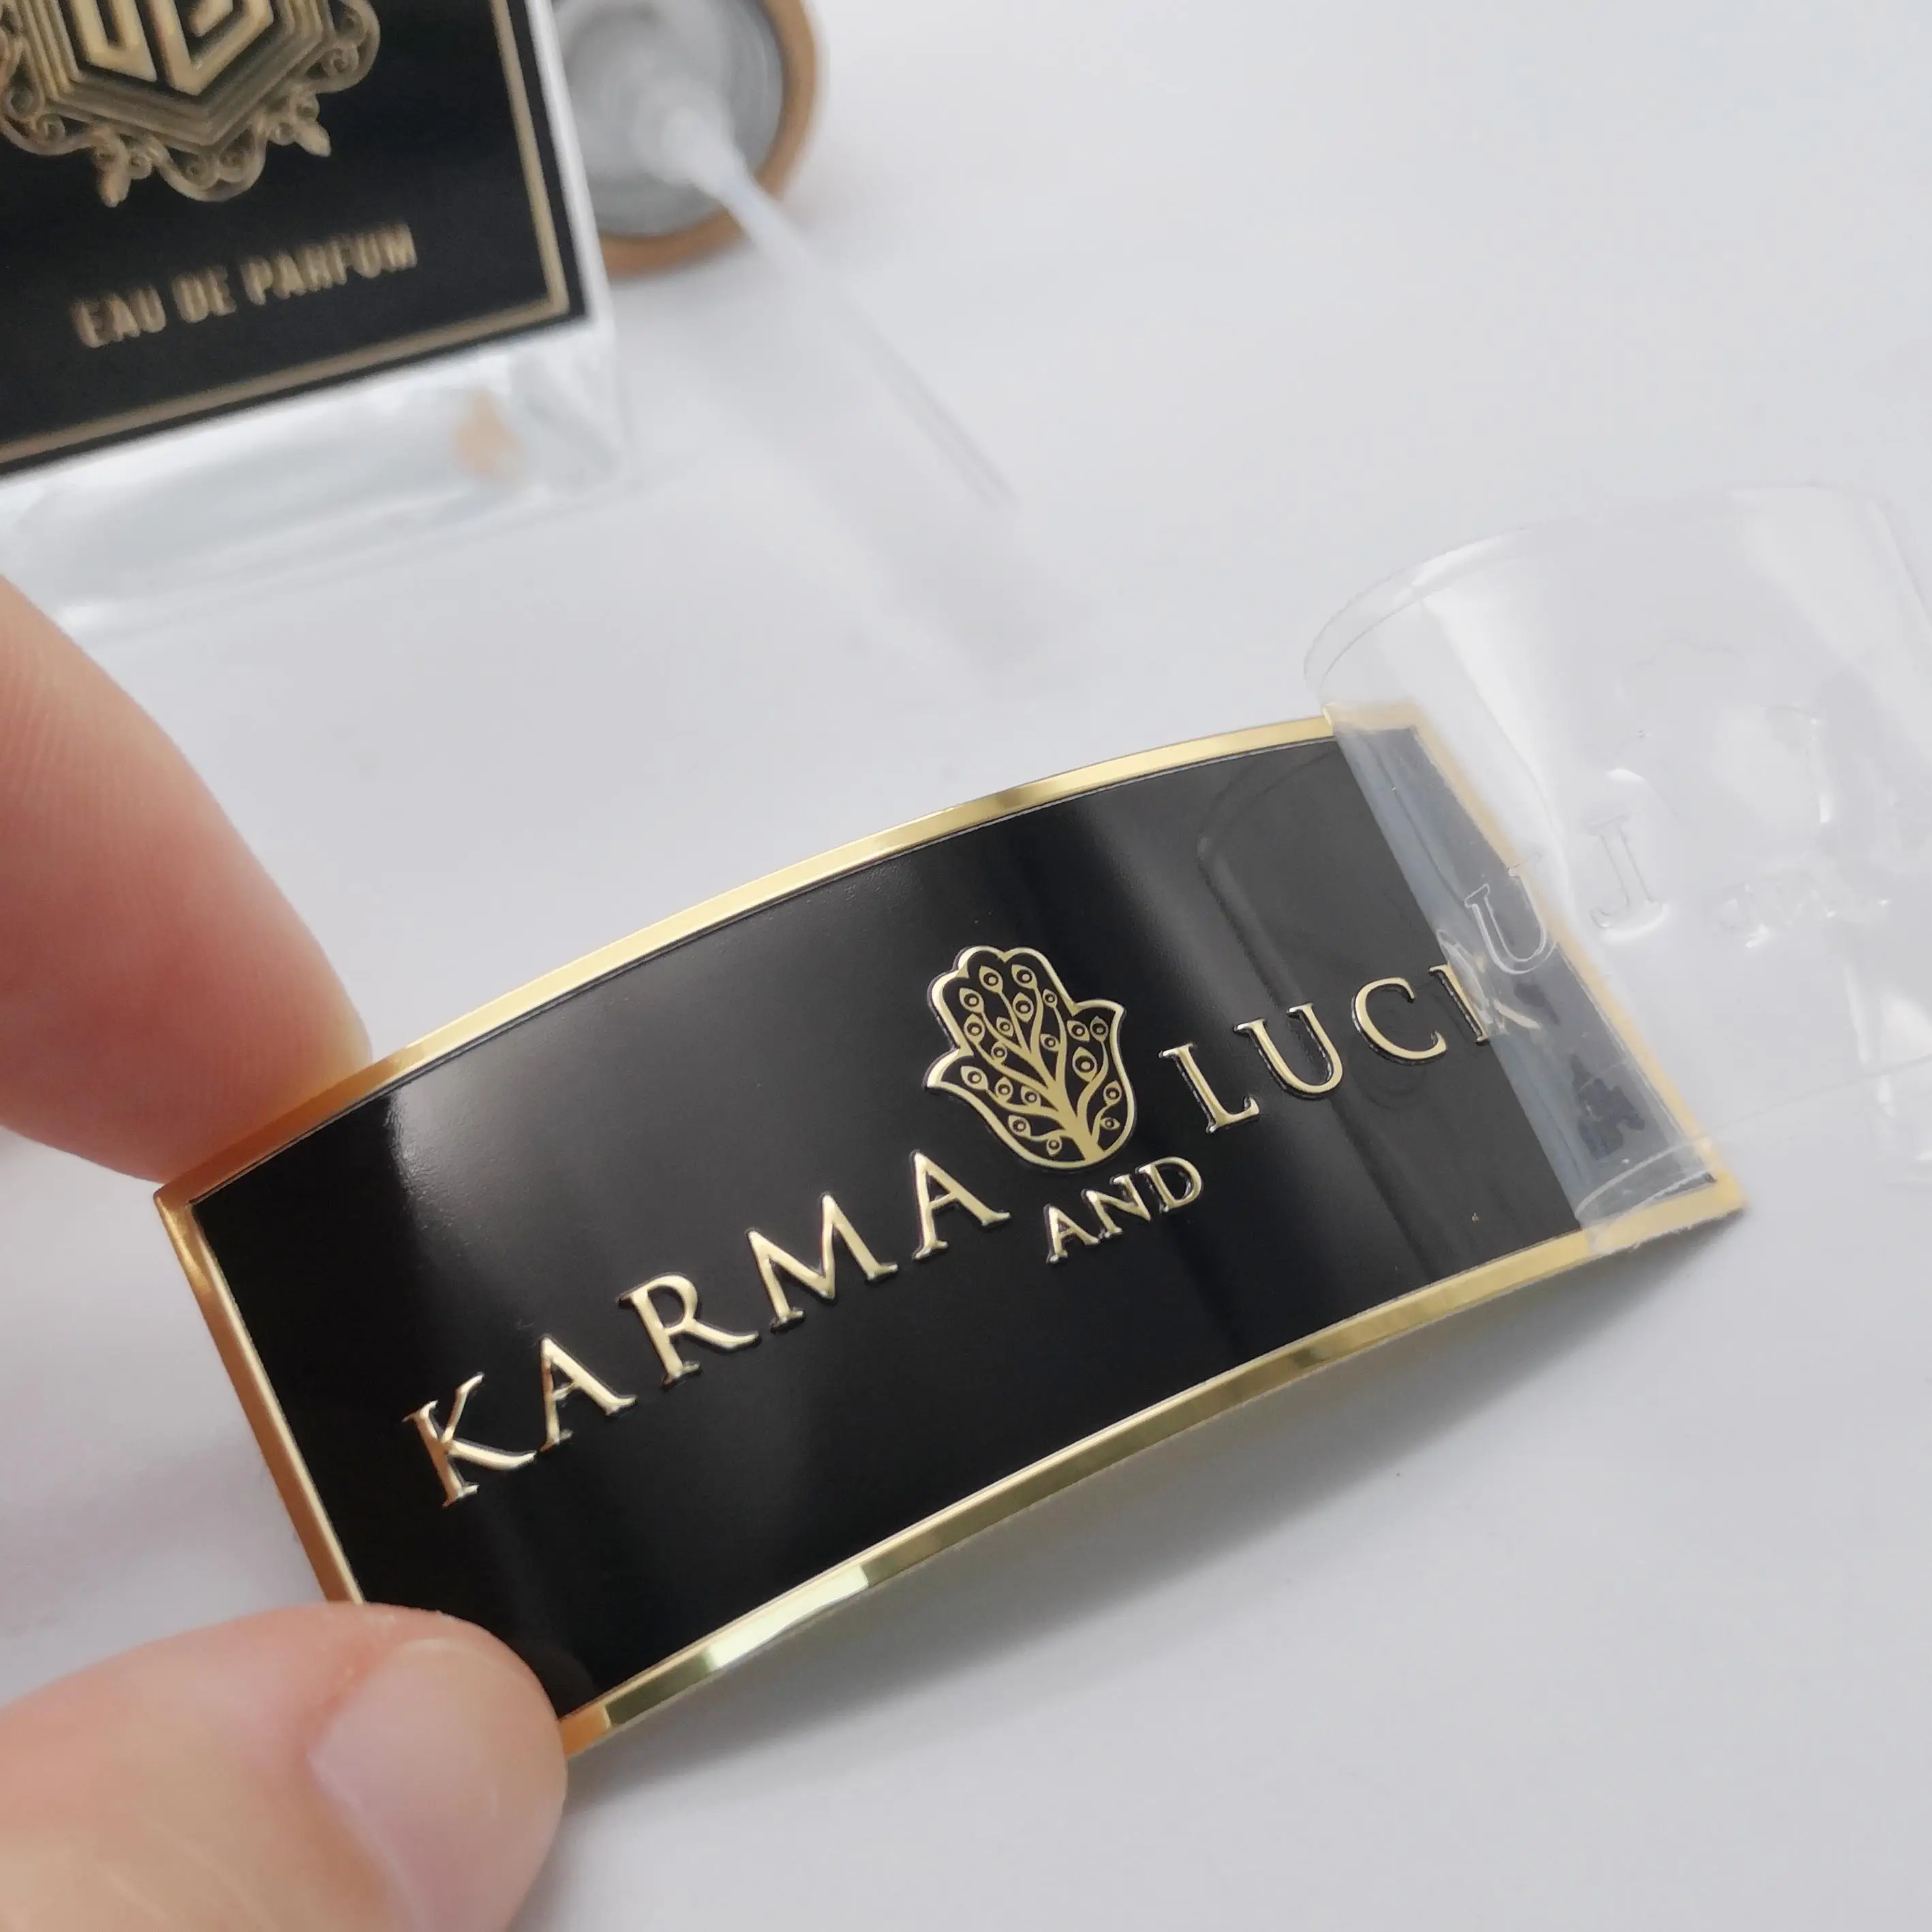 Adesivo de metal personalizado com gravura premium, para uso comercial, adesivos personalizados, etiqueta de logotipo, velas, etiqueta privada, perfumada